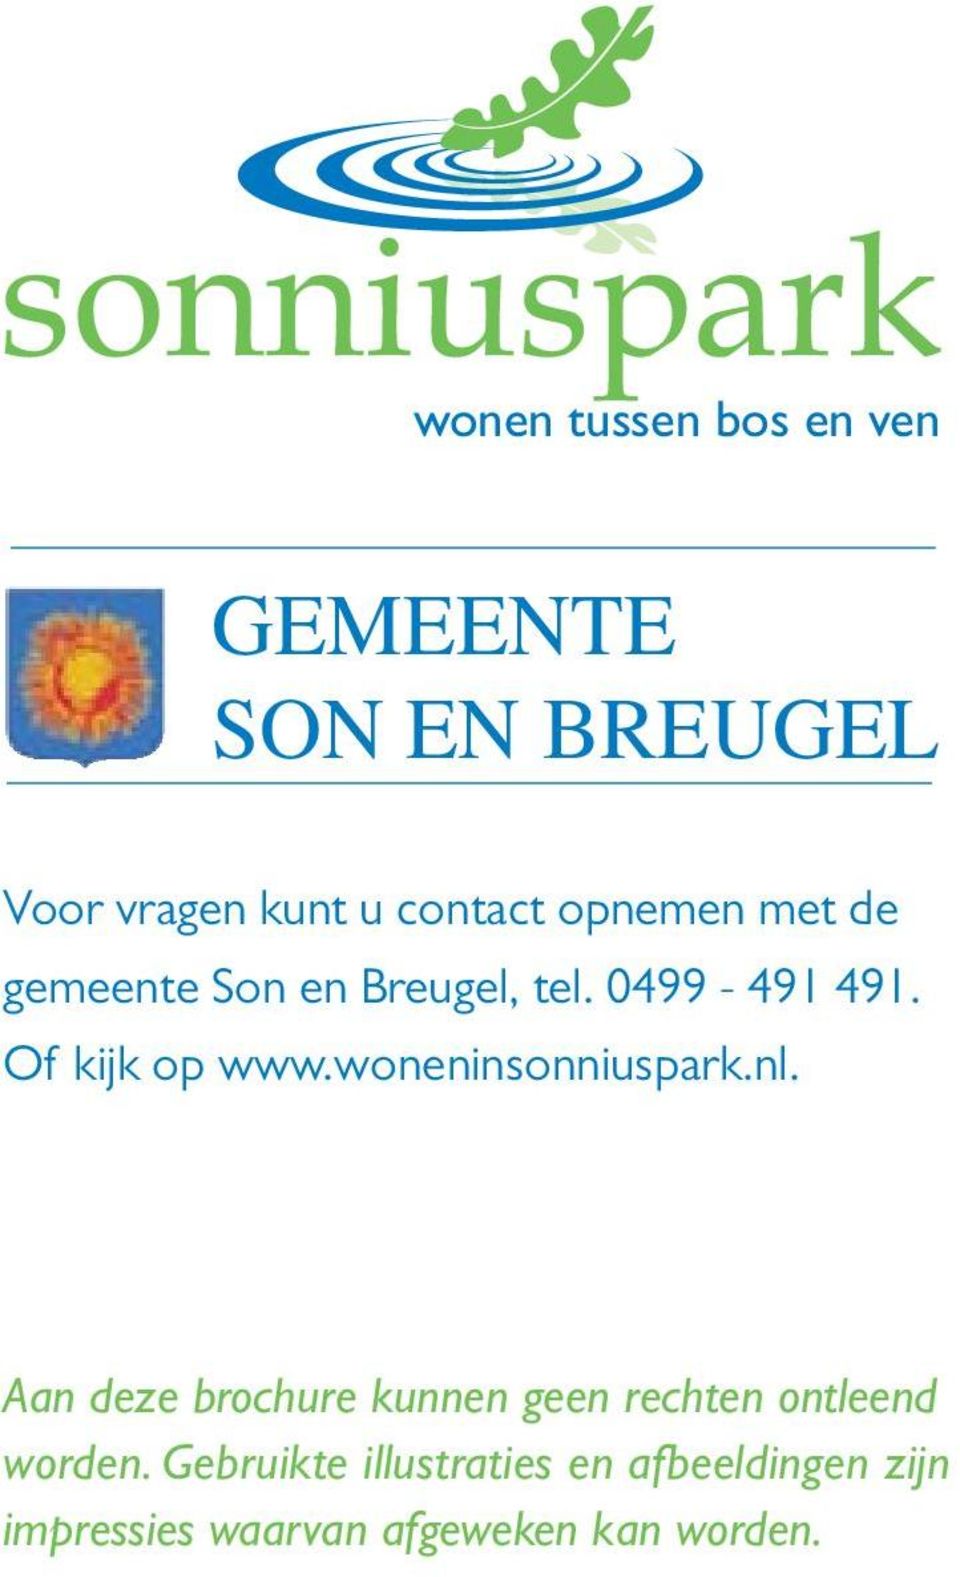 Of kijk op www.woneninsonniuspark.nl.